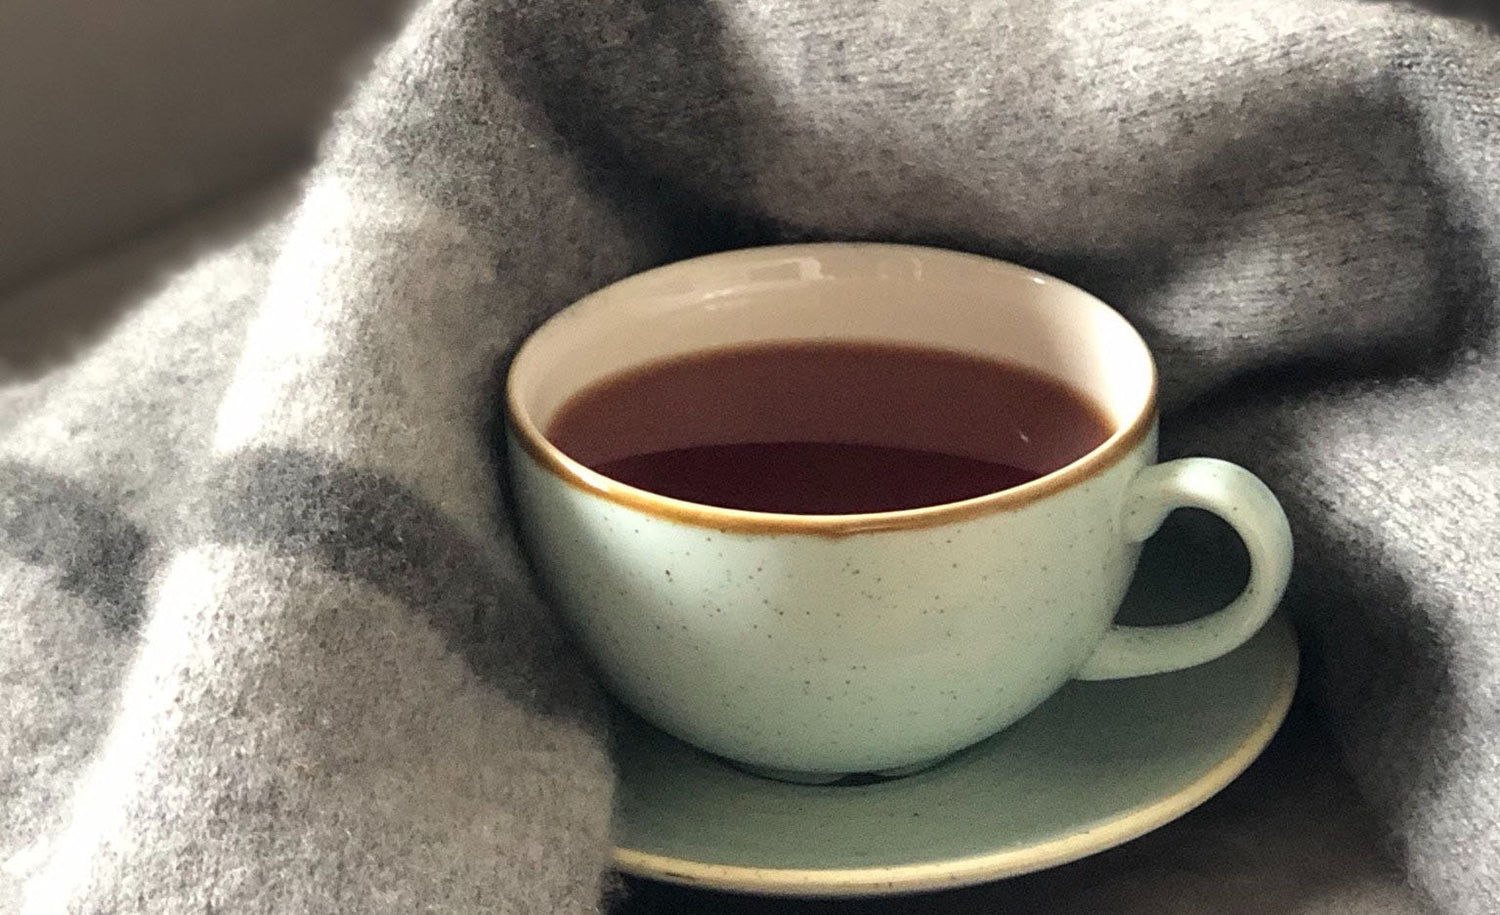 Tea in a cozy blanket